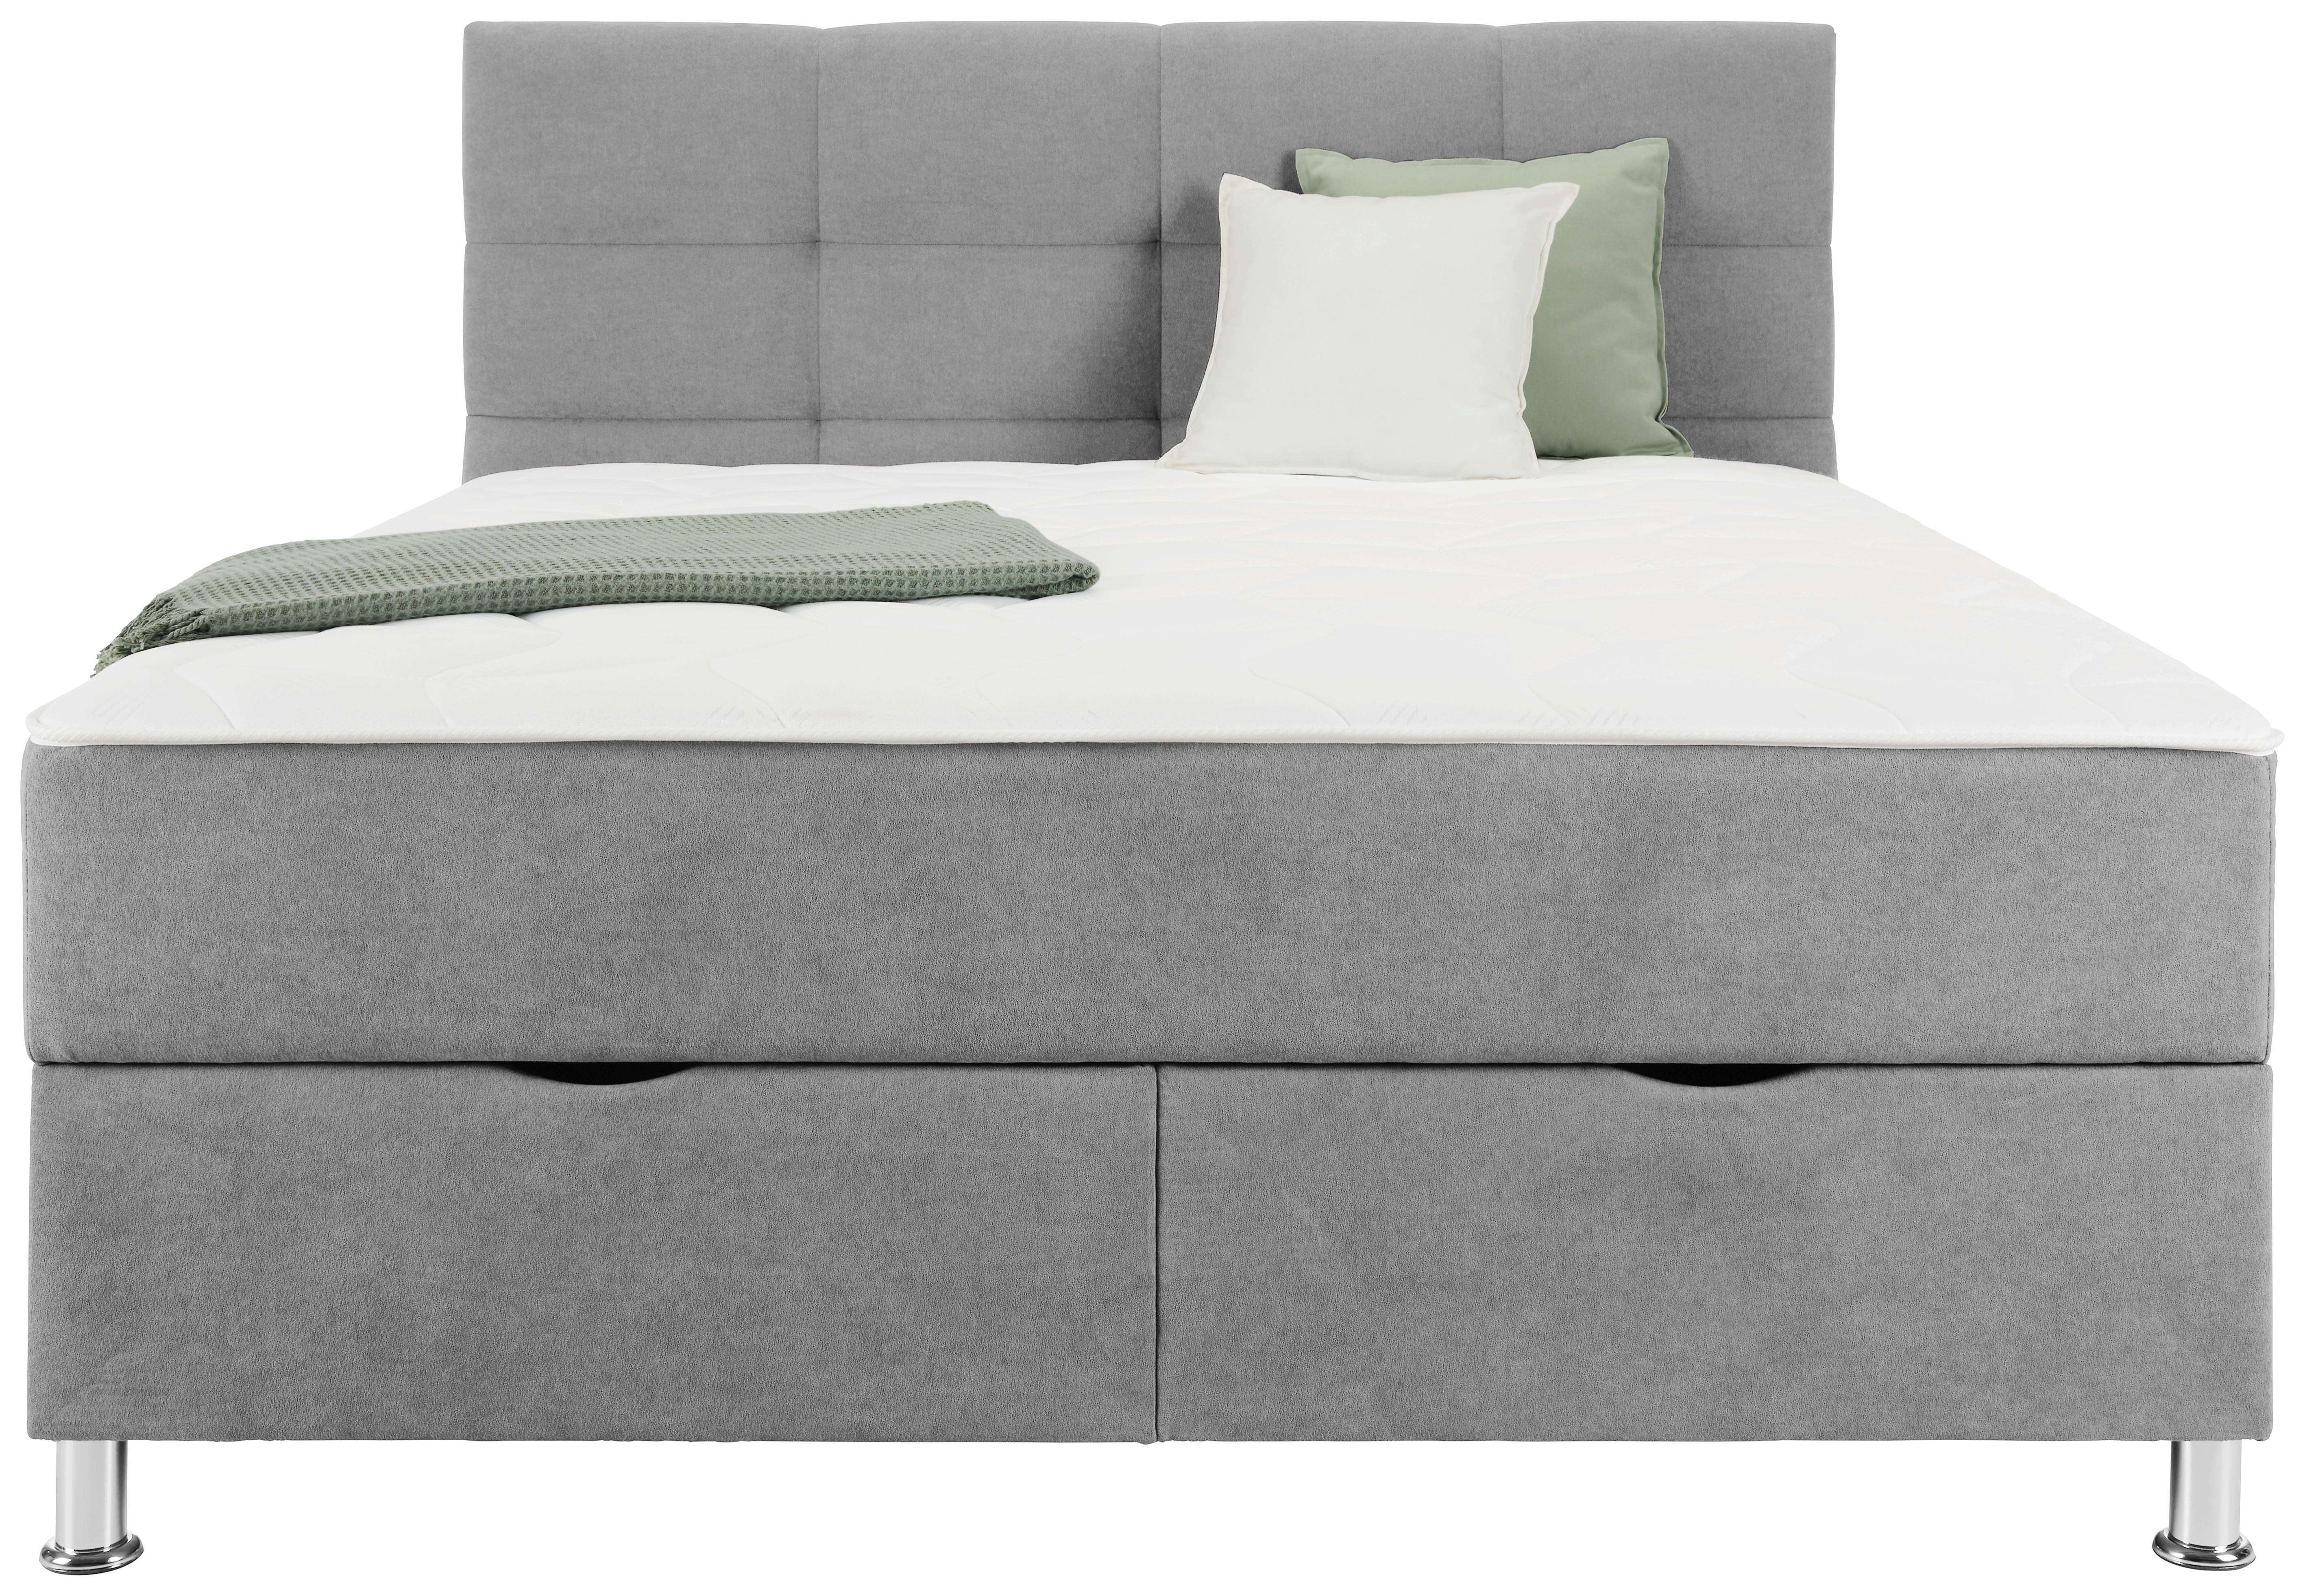 Boxbett in Grau ca. 180x200cm - Grau, Konventionell, Textil/Metall (180/200cm) - Modern Living